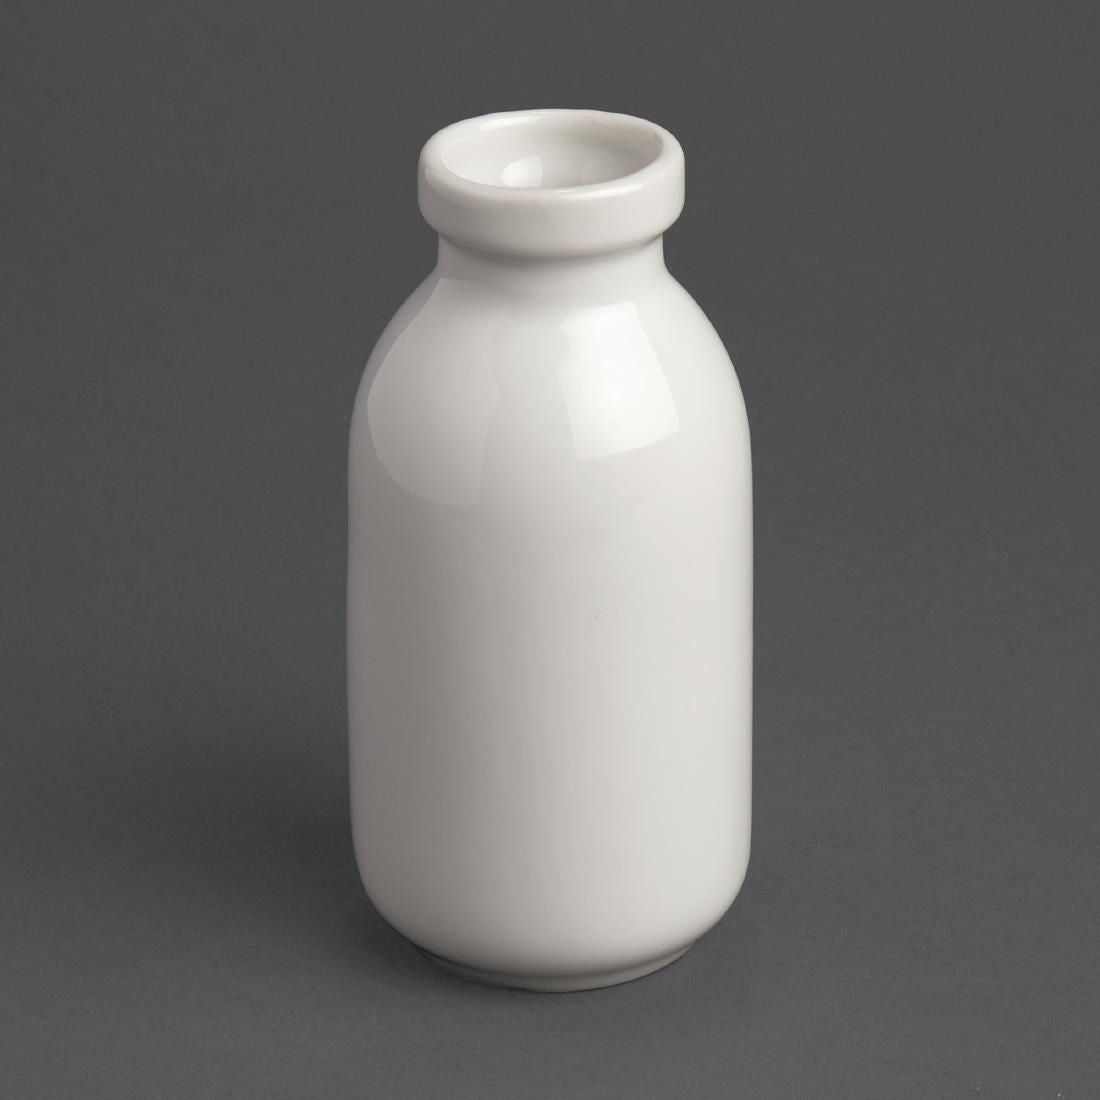 GM368 Olympia White Mini Milk Bottle 145ml (Pack of 12) JD Catering Equipment Solutions Ltd